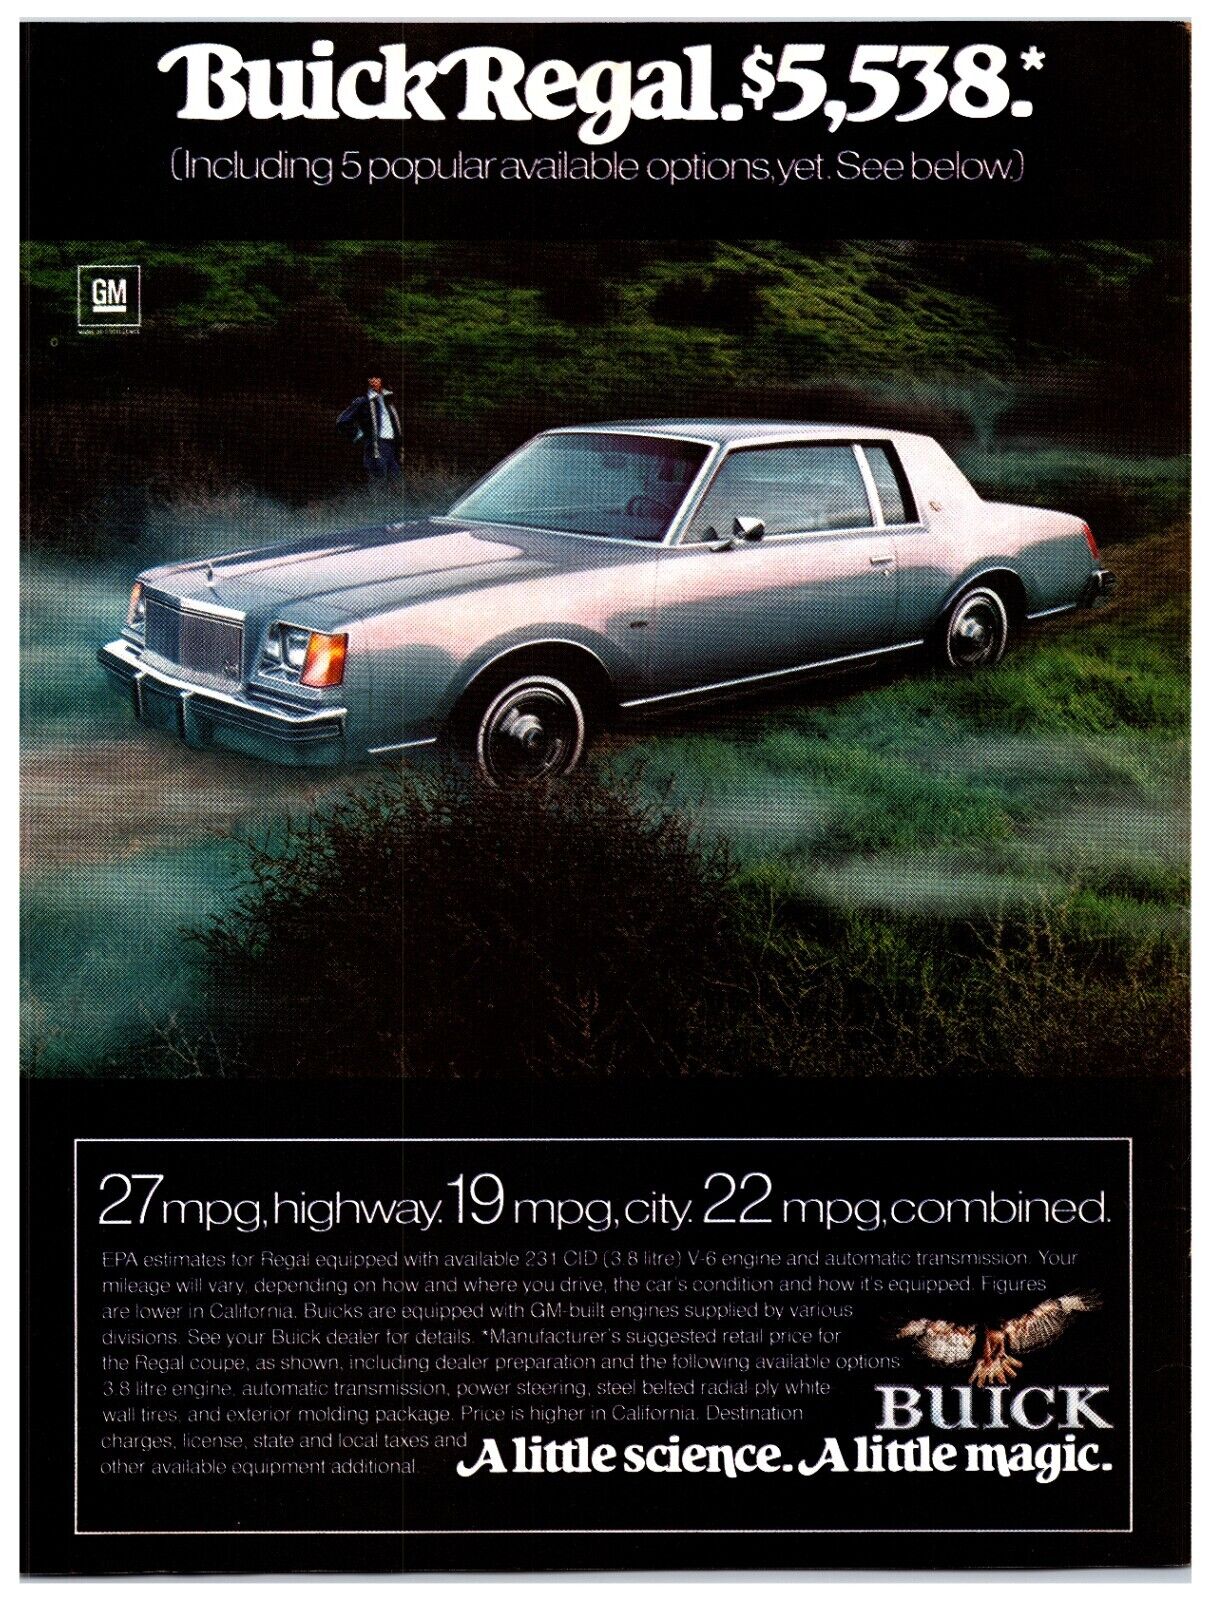 1978 Buick Regal Car - Original Print Ad (8.5in x 11in) - Vintage Advertisement